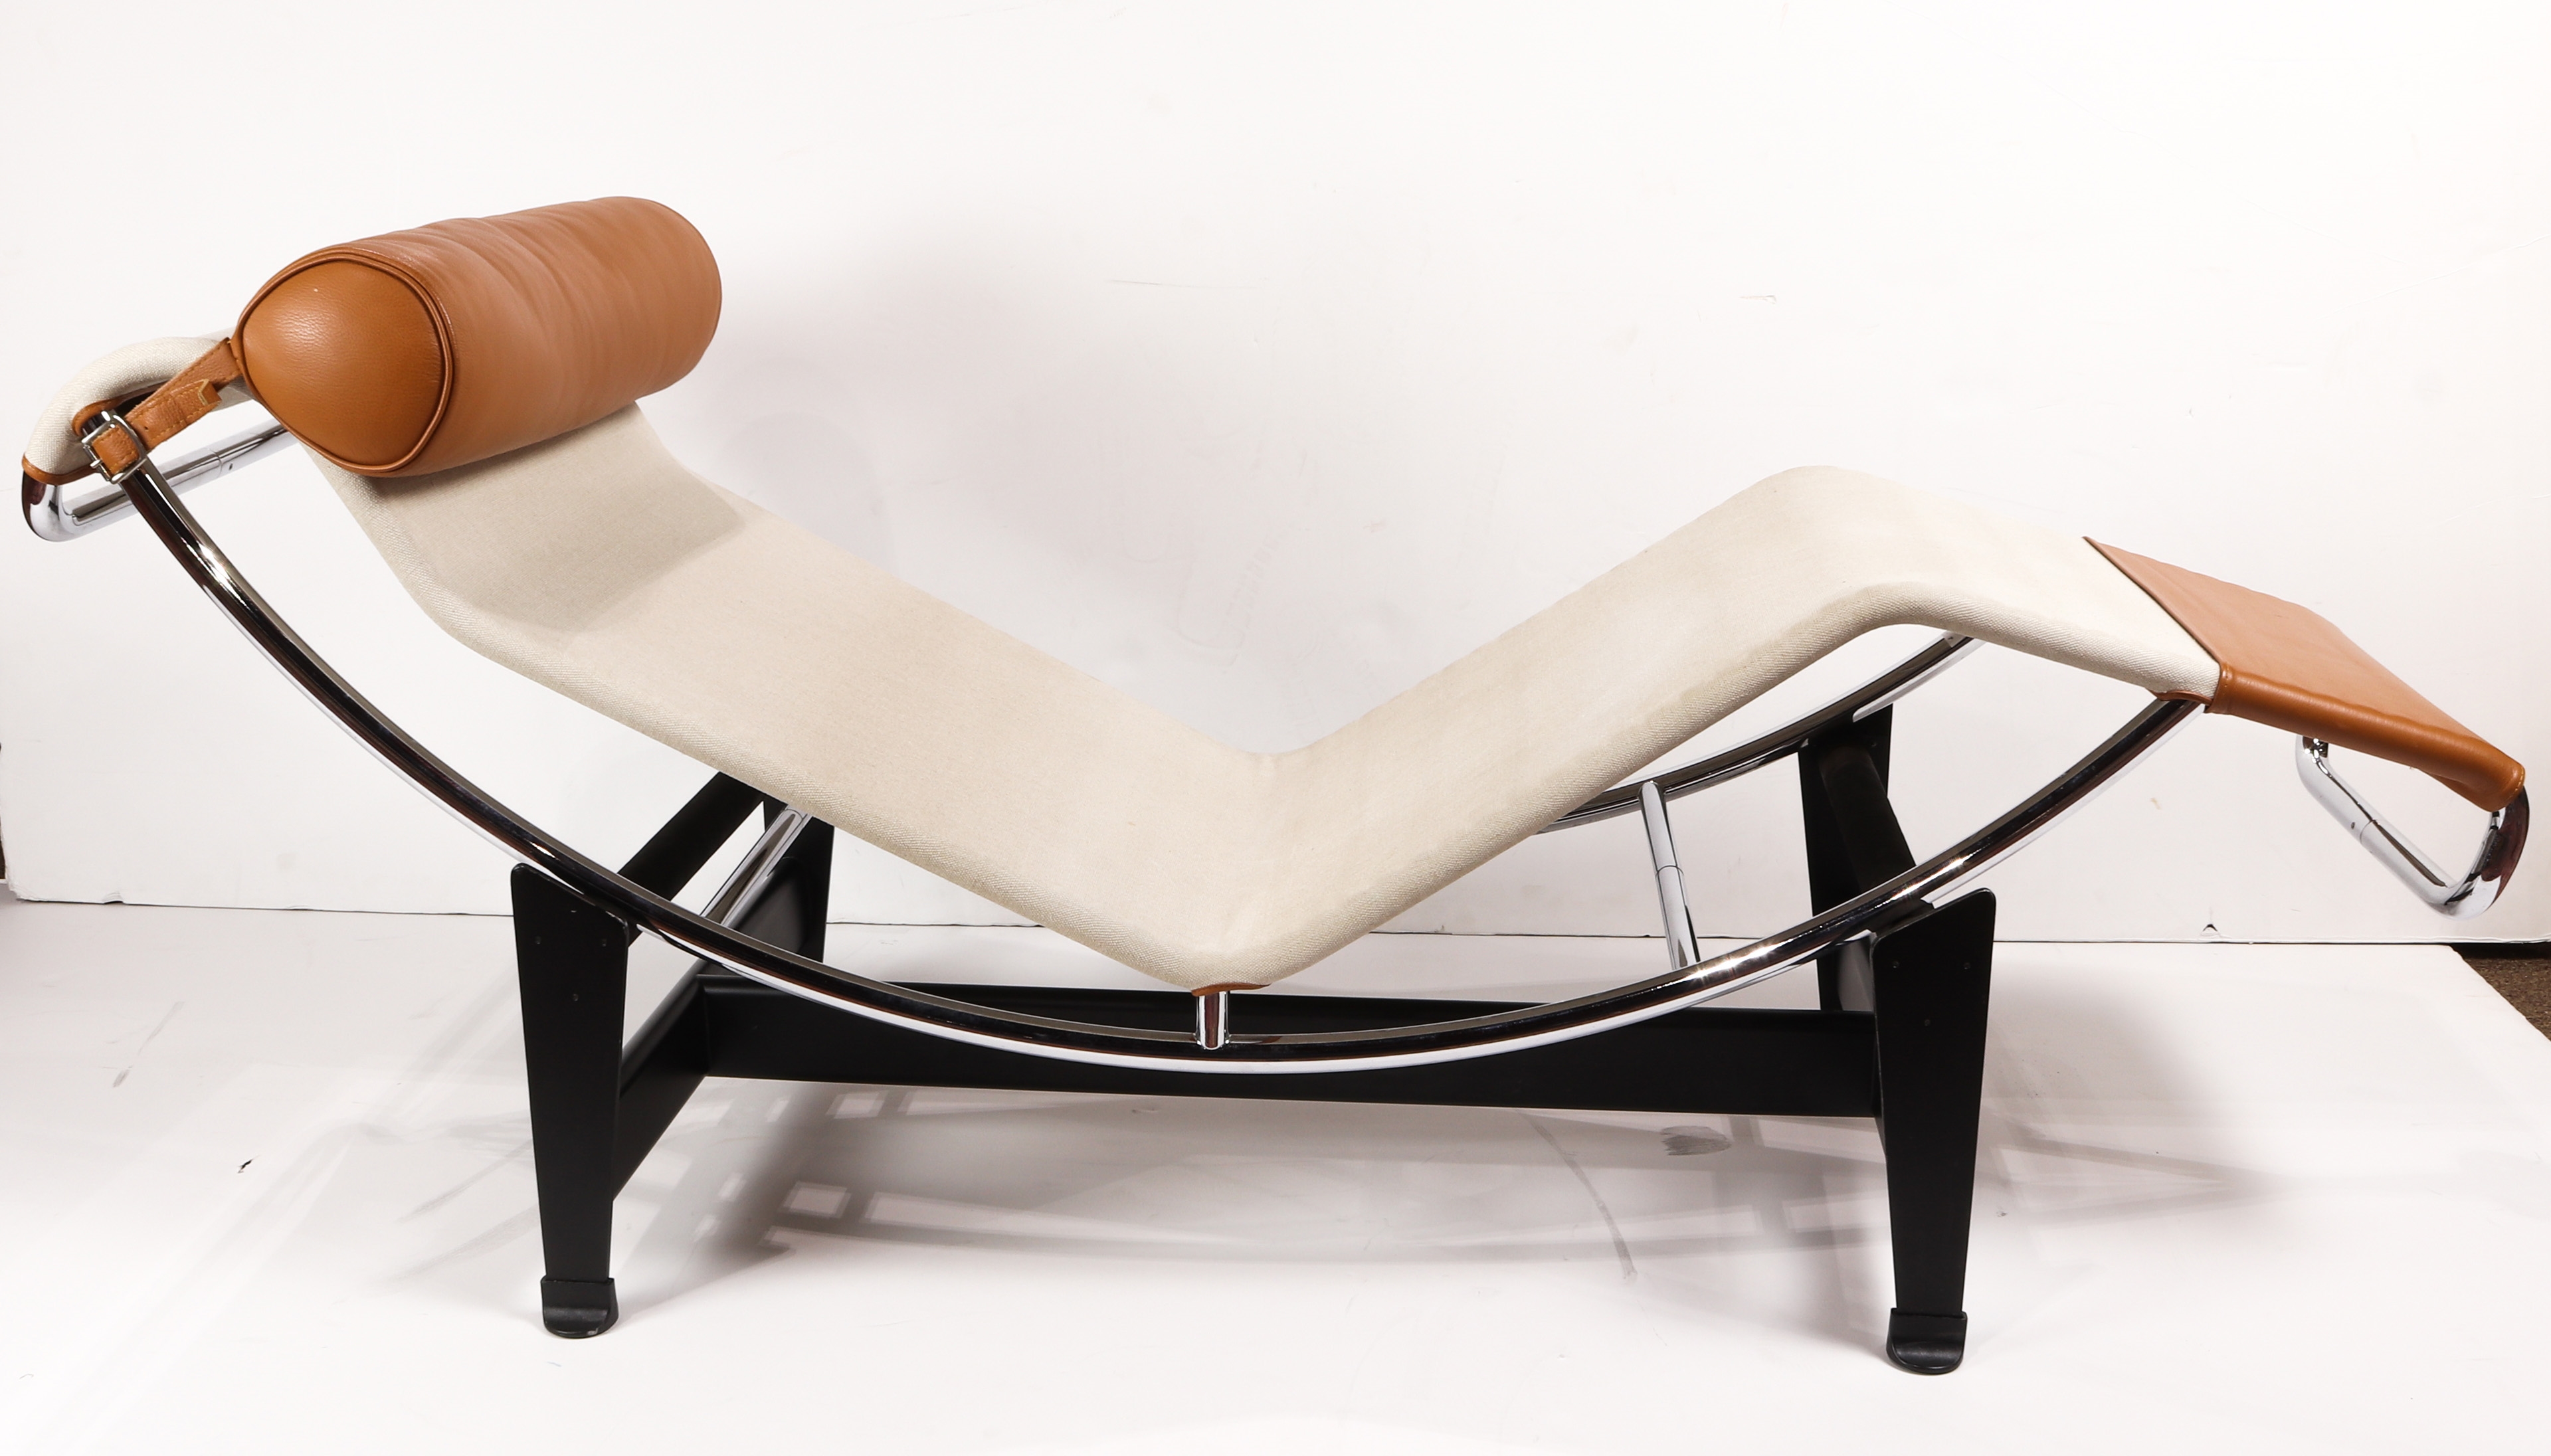 Le Corbusier, Le Corbusier for Cassina LC4 adjustable chaise lounge